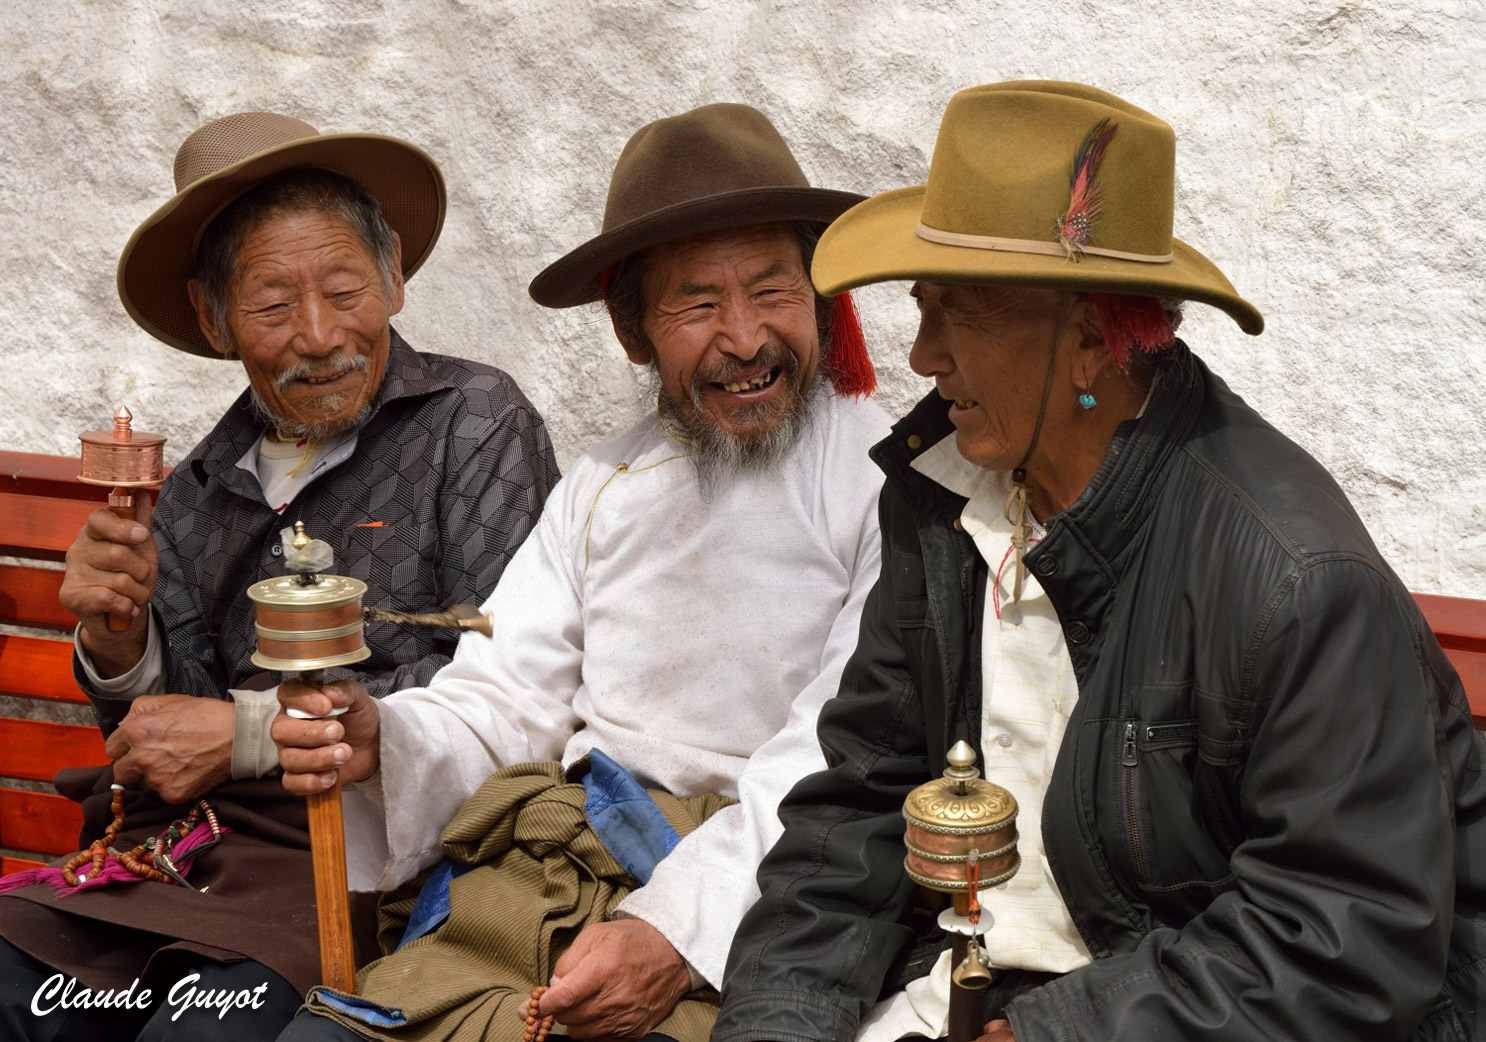 Old Tibetan in the Barkhor